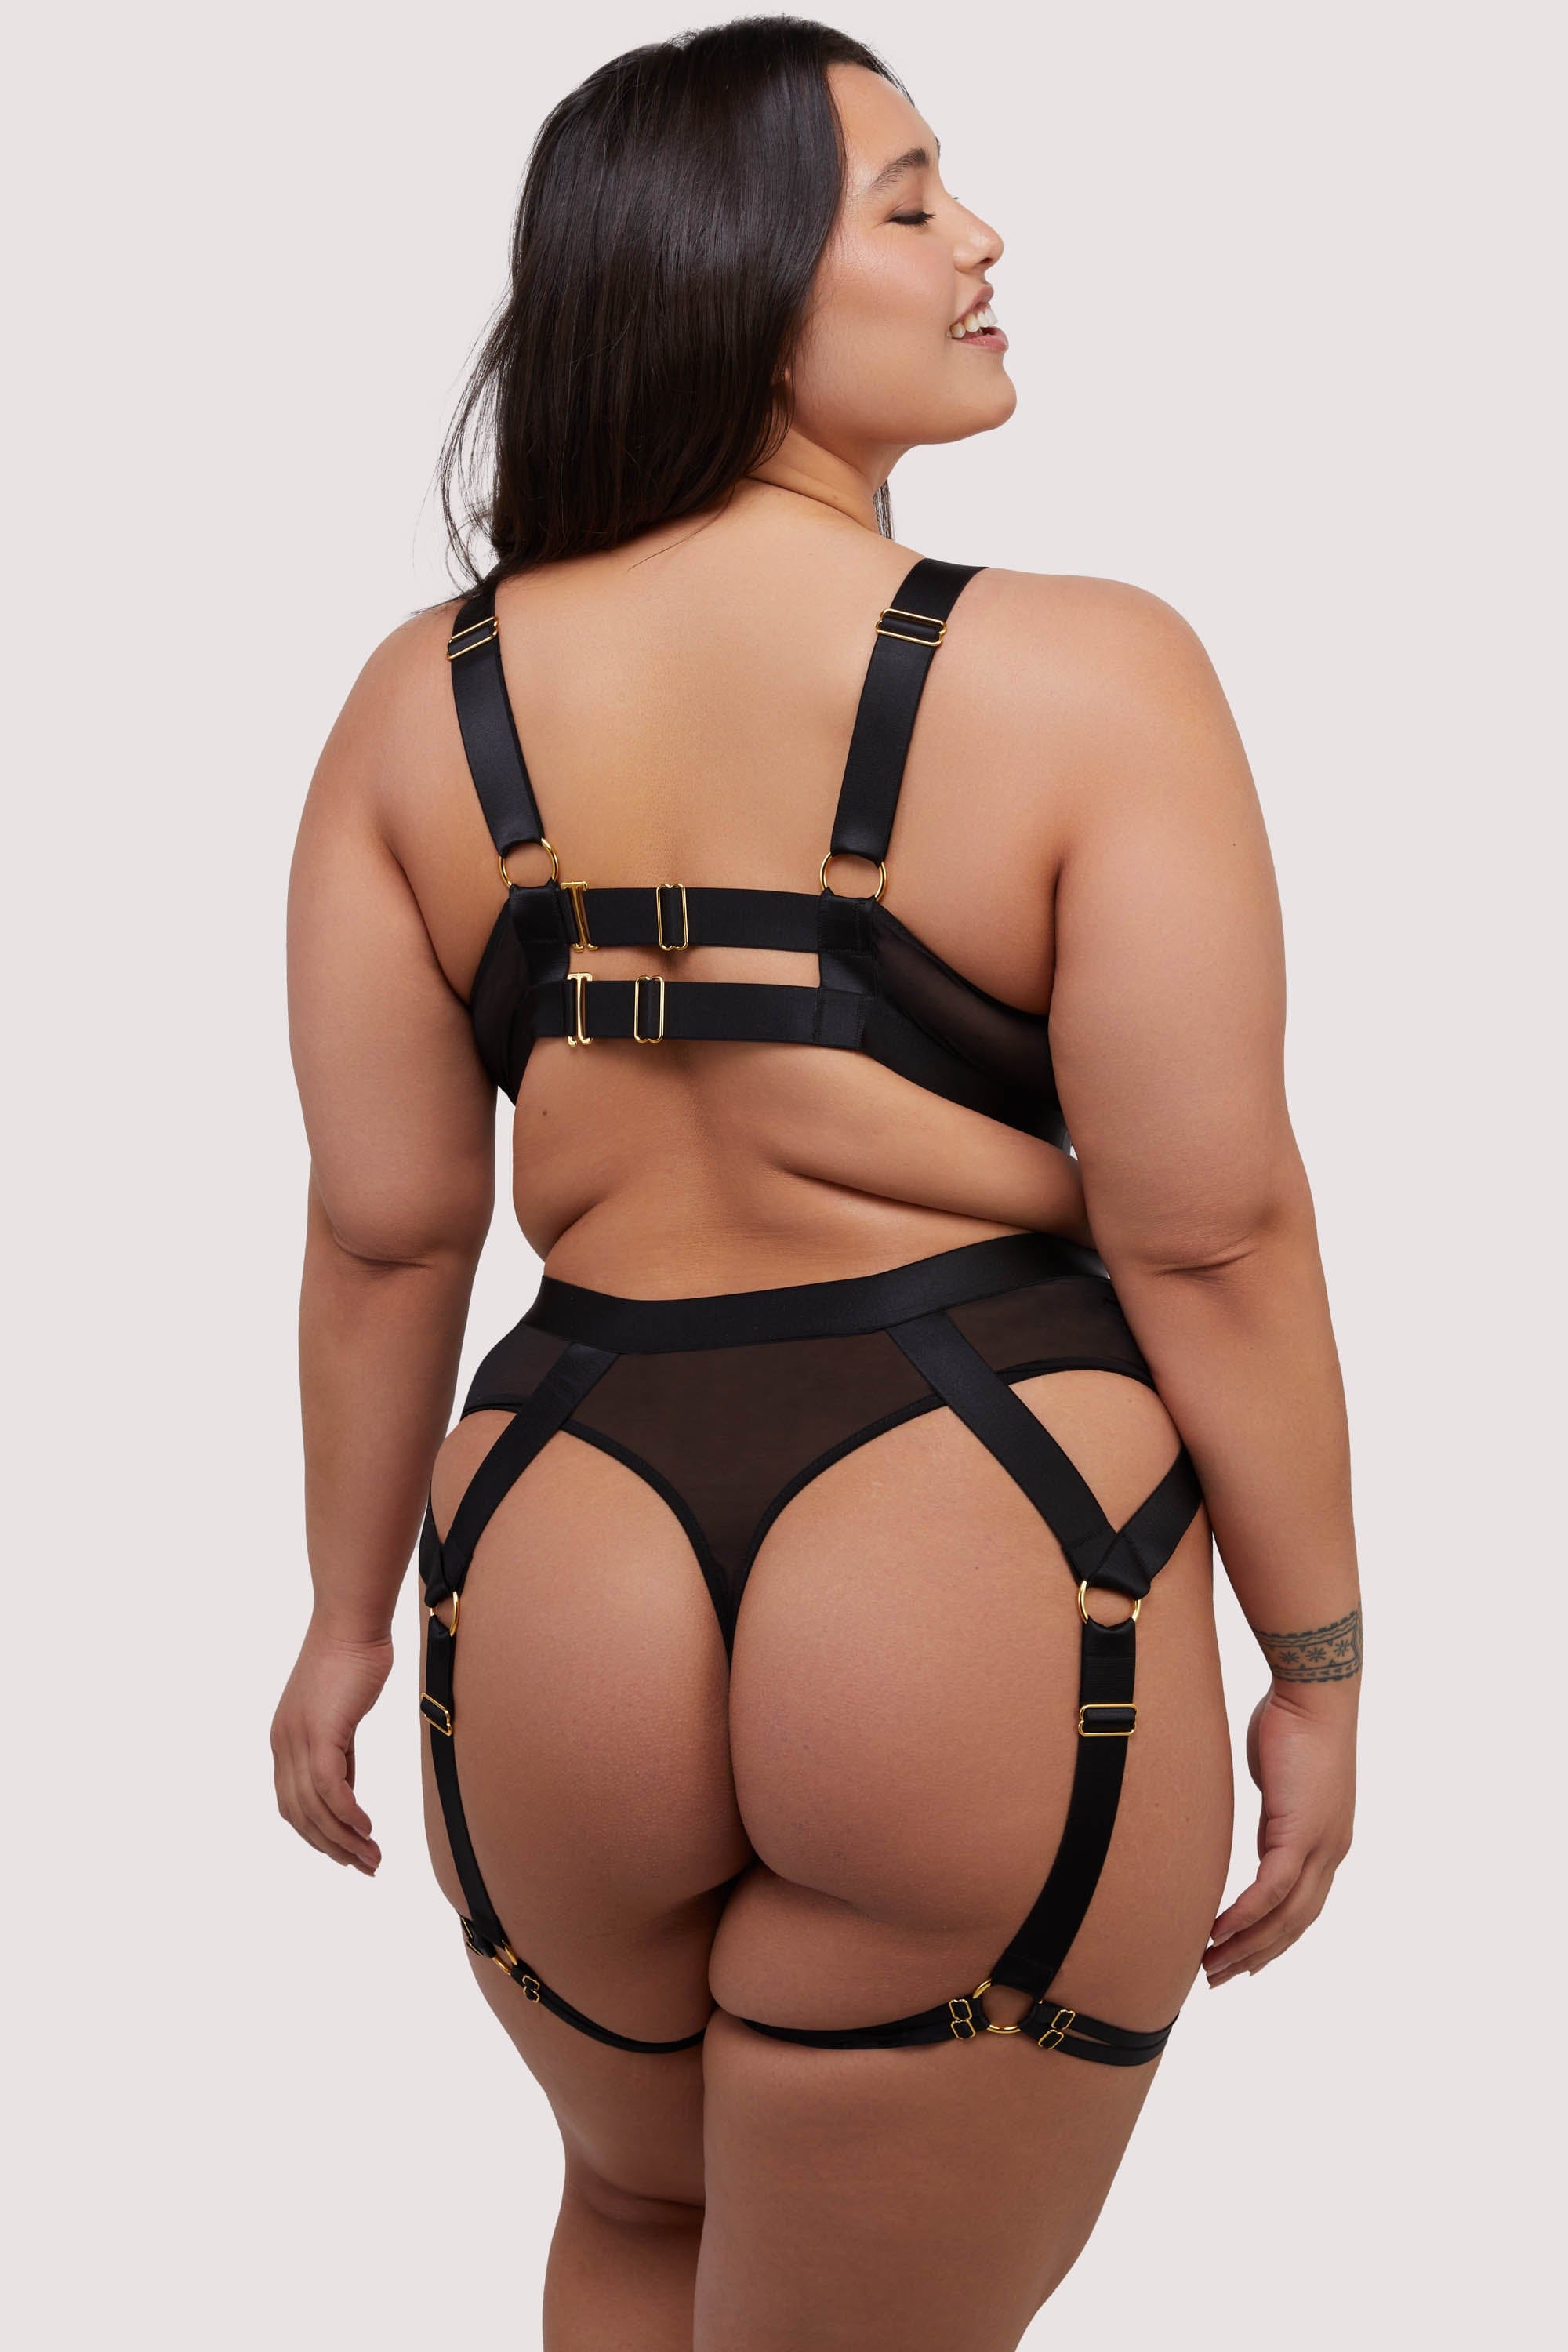 model shows the back of the black mesh elastic multi strap bodysuit